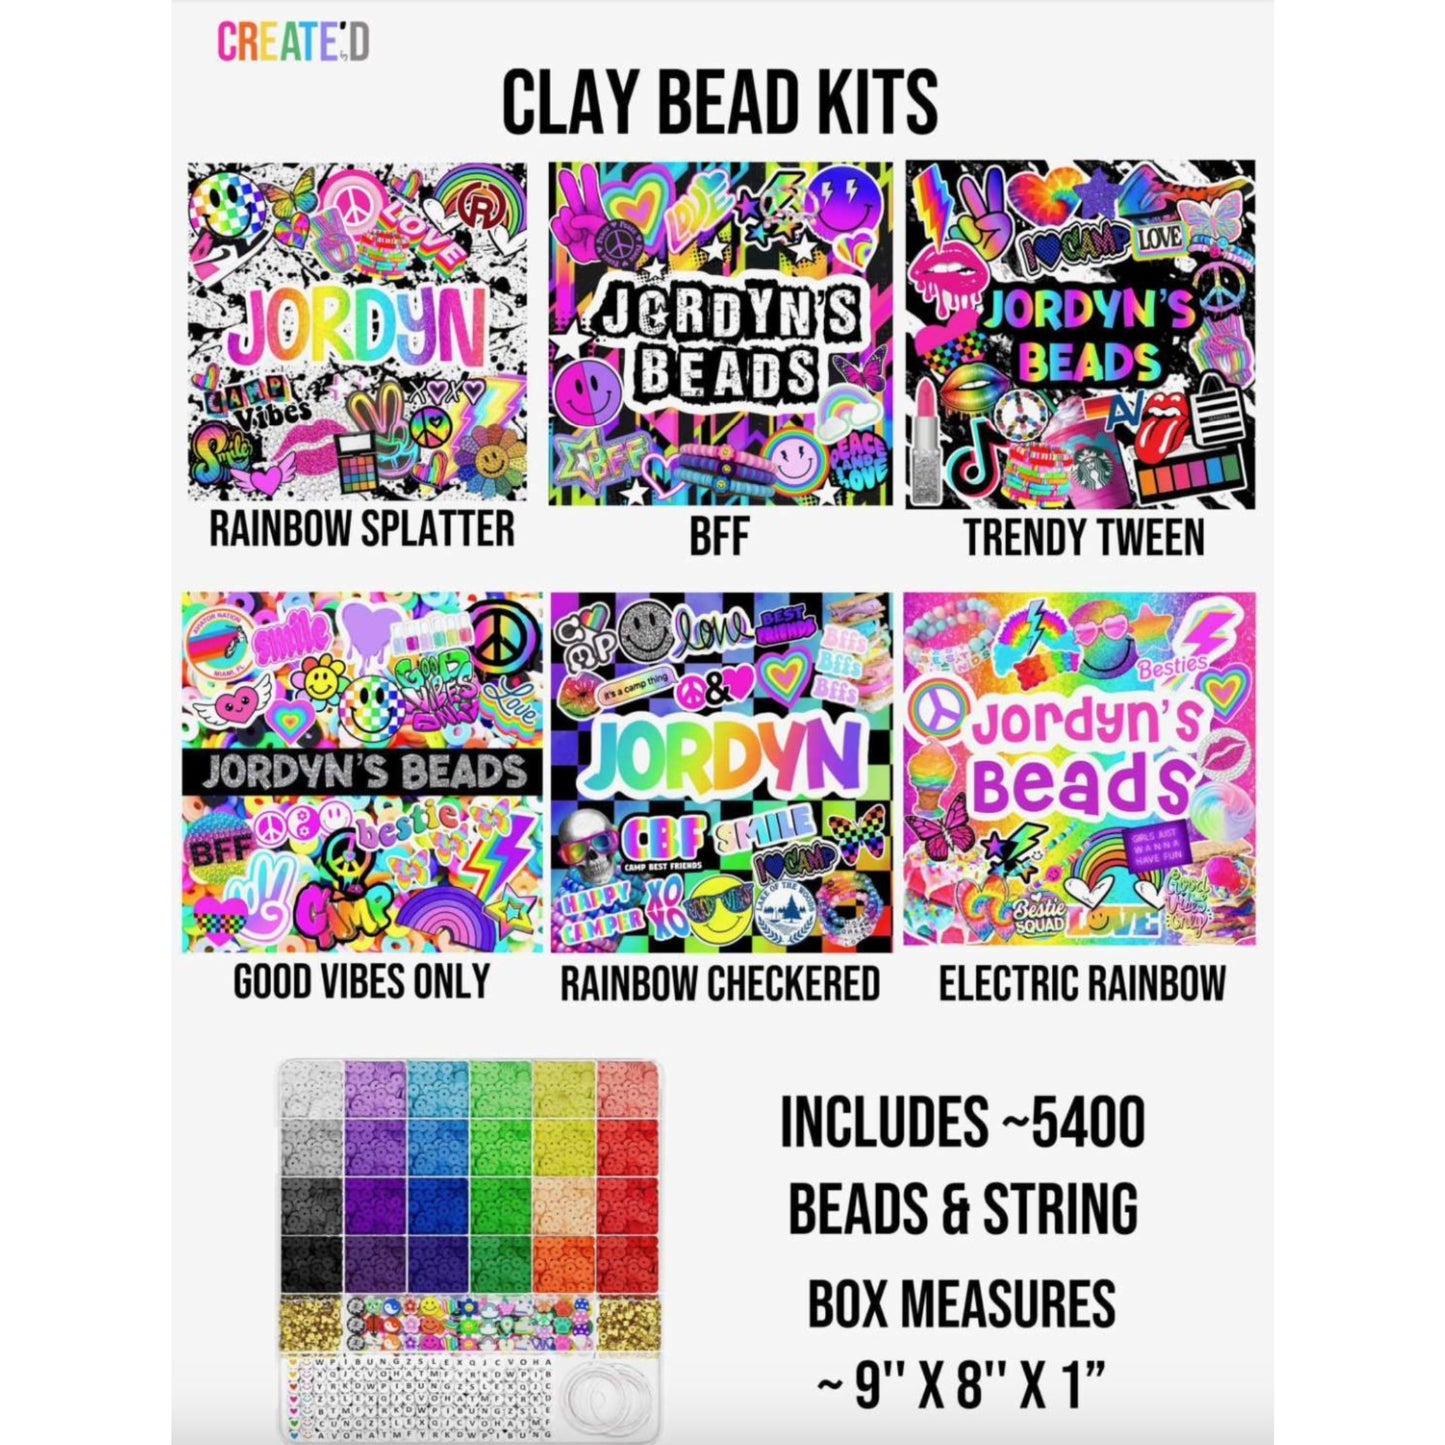 The Best Clay Bead Kits